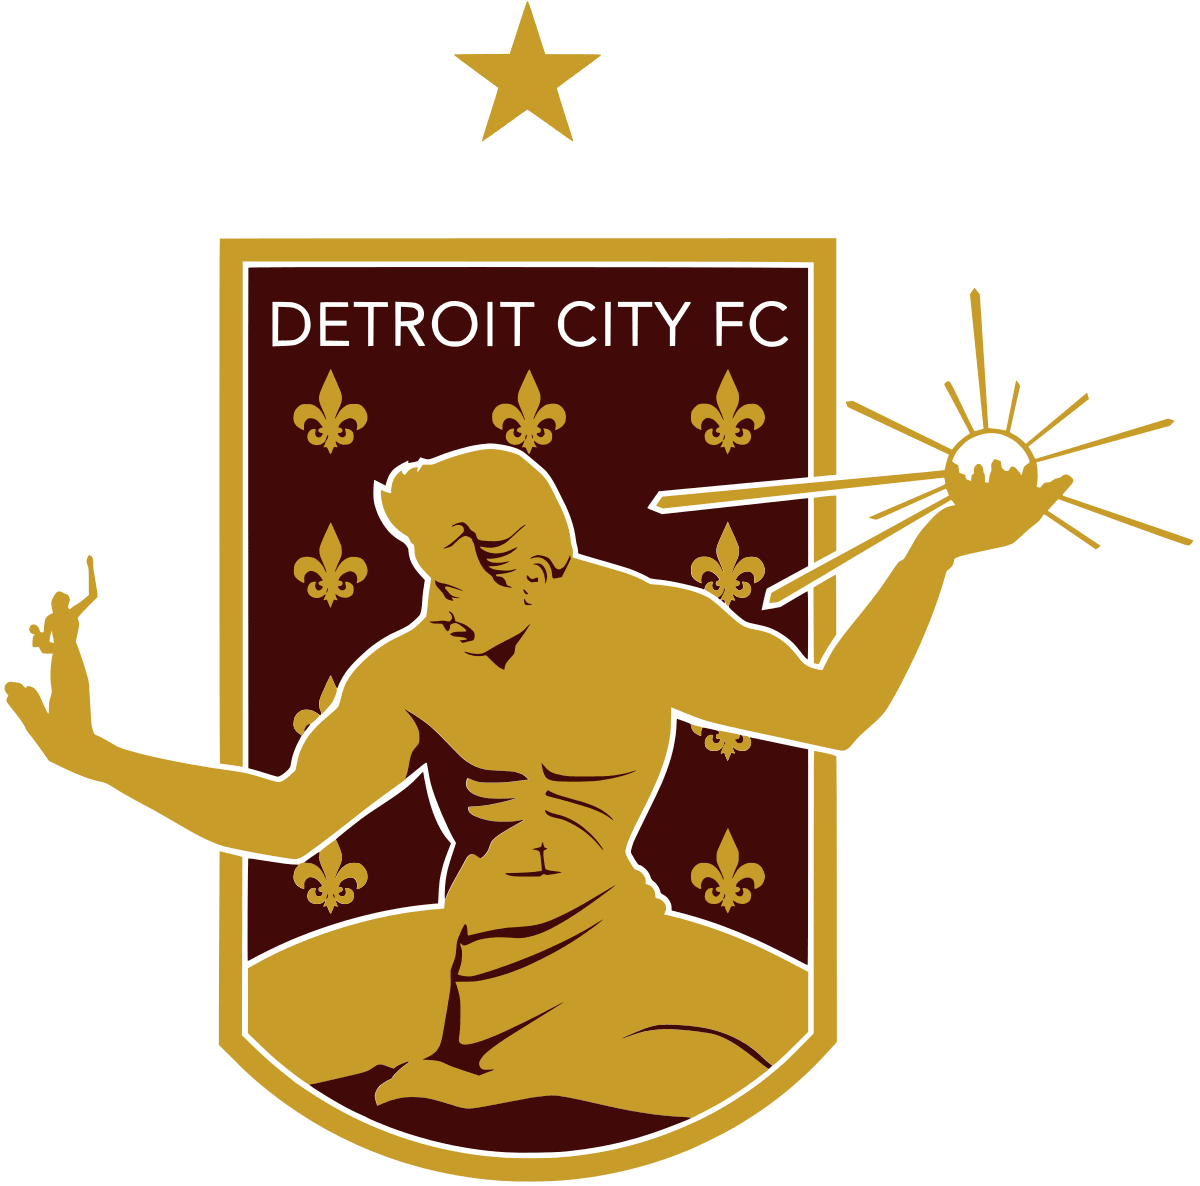 Detroit City FC - Wikipedia